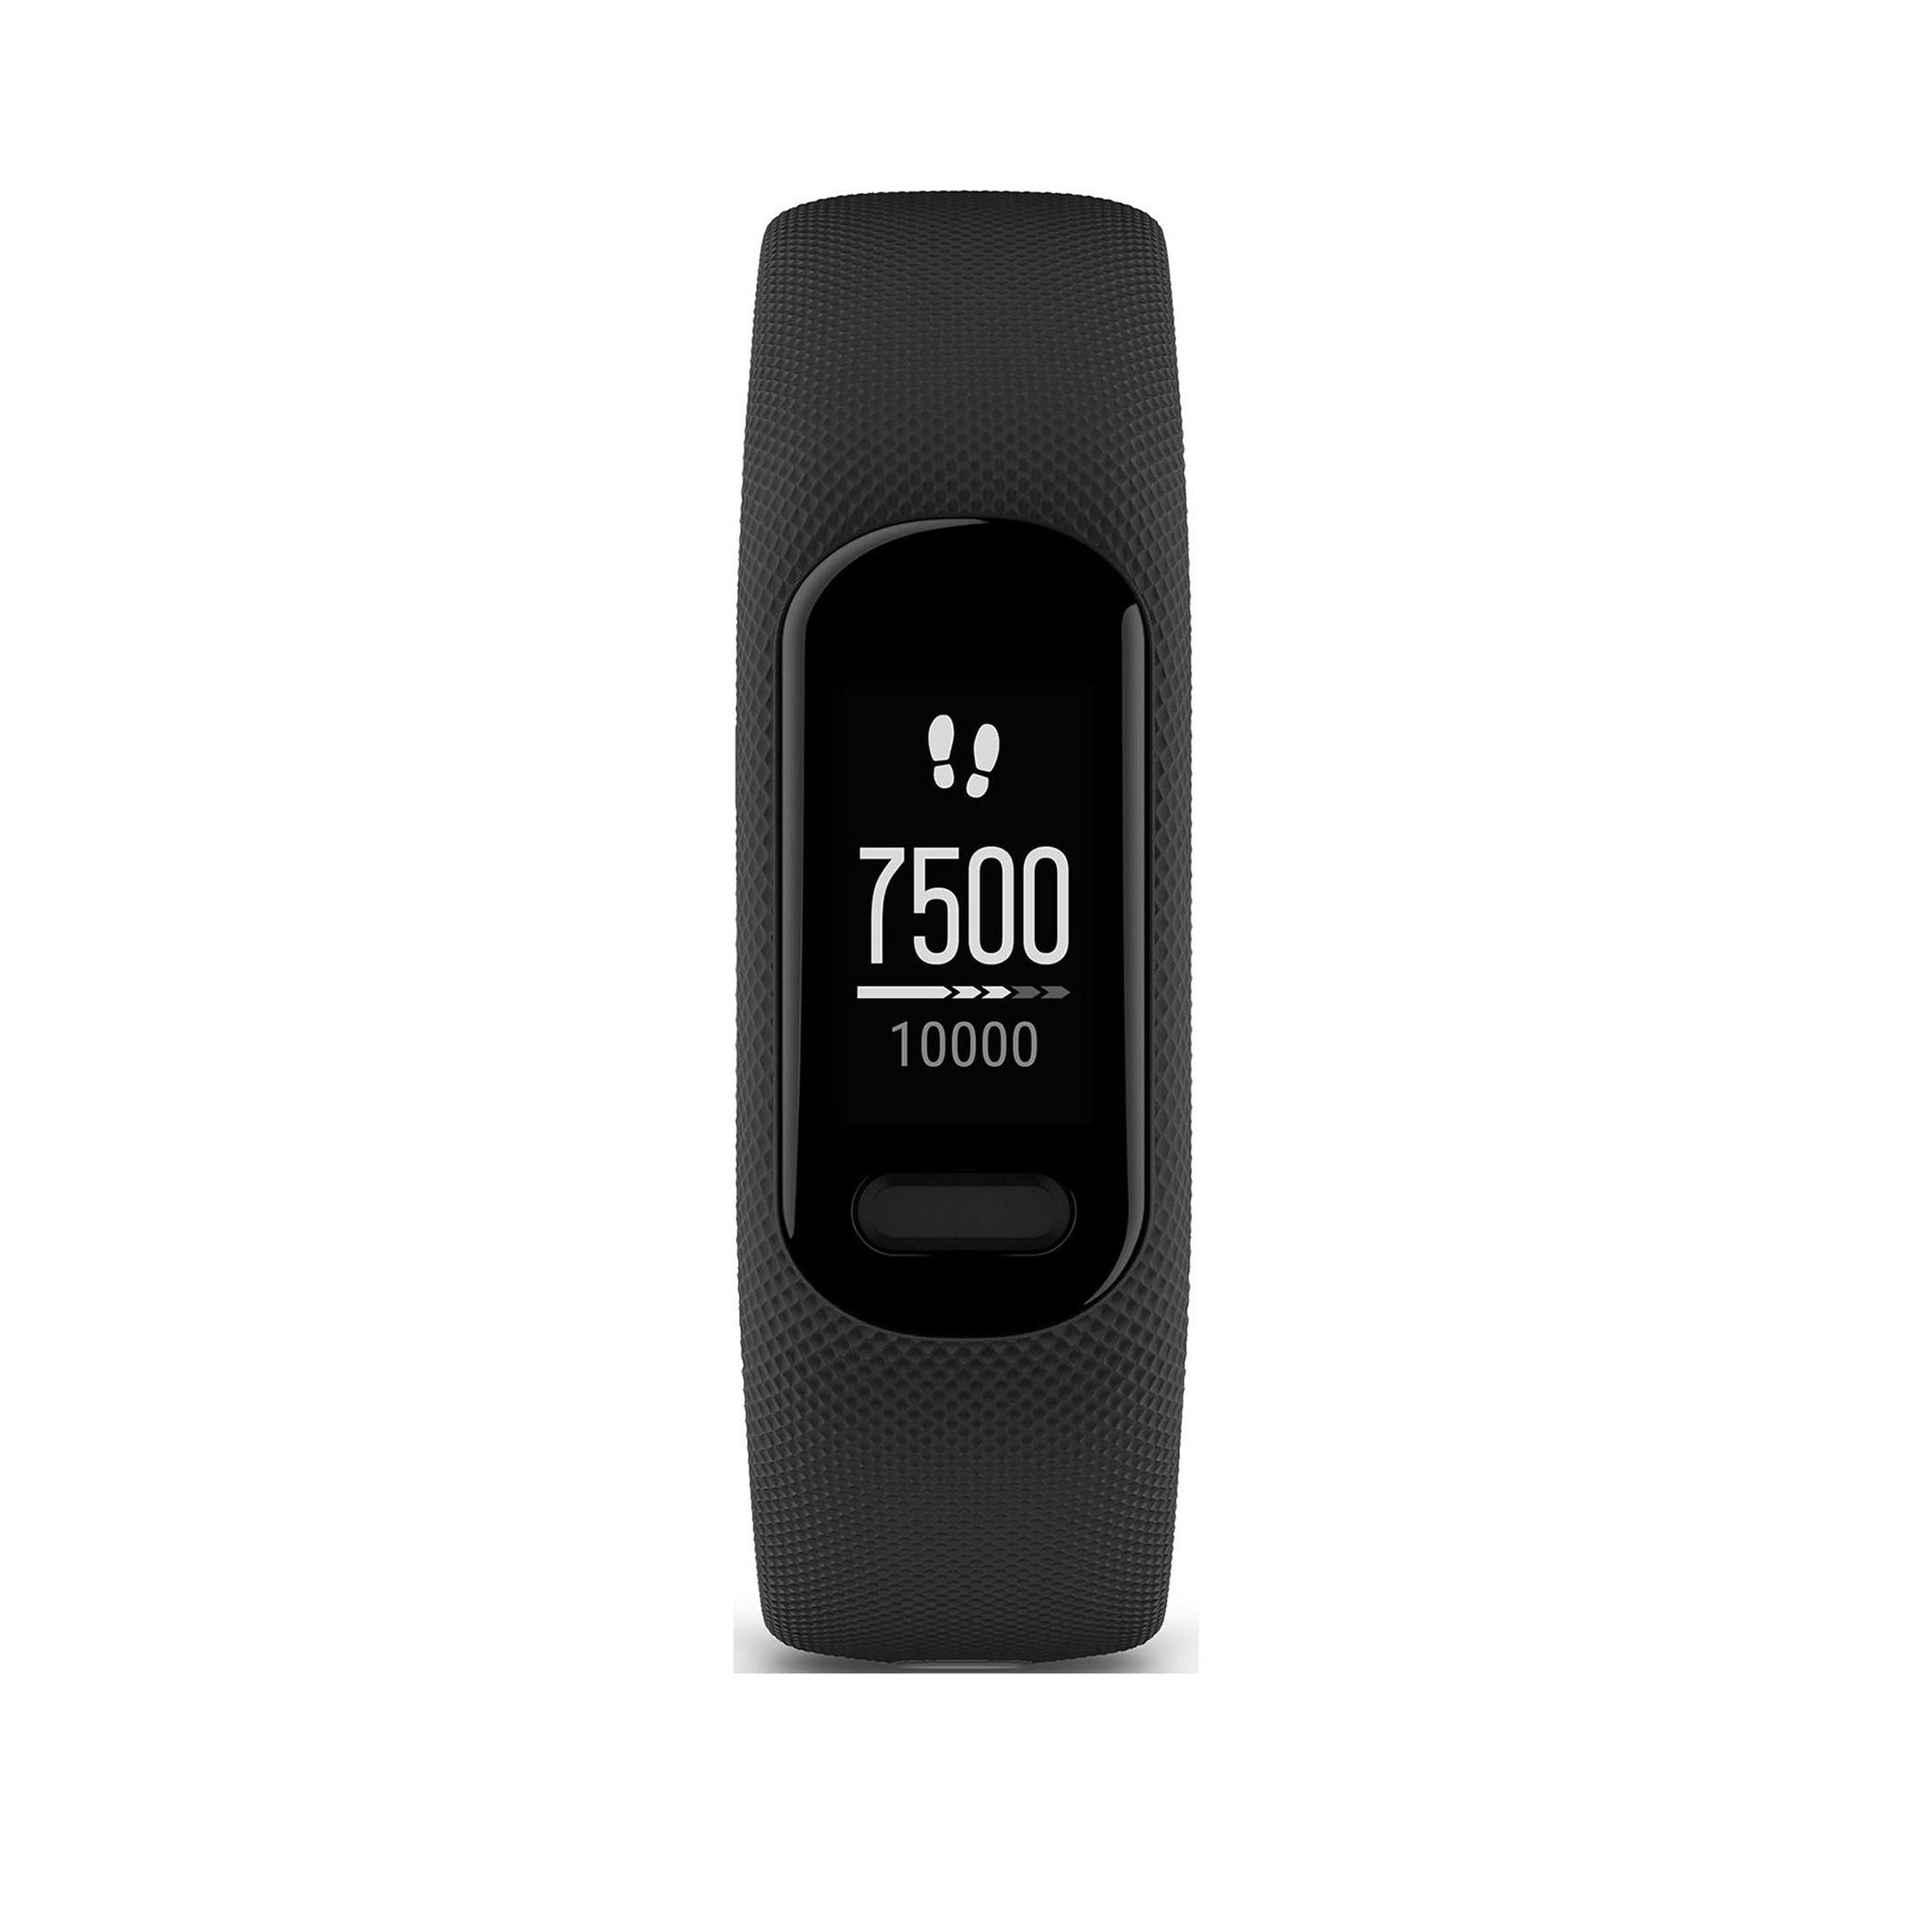 Garmin VivoSmart 5 Activity Tracker - Black - Refurbished Excellent